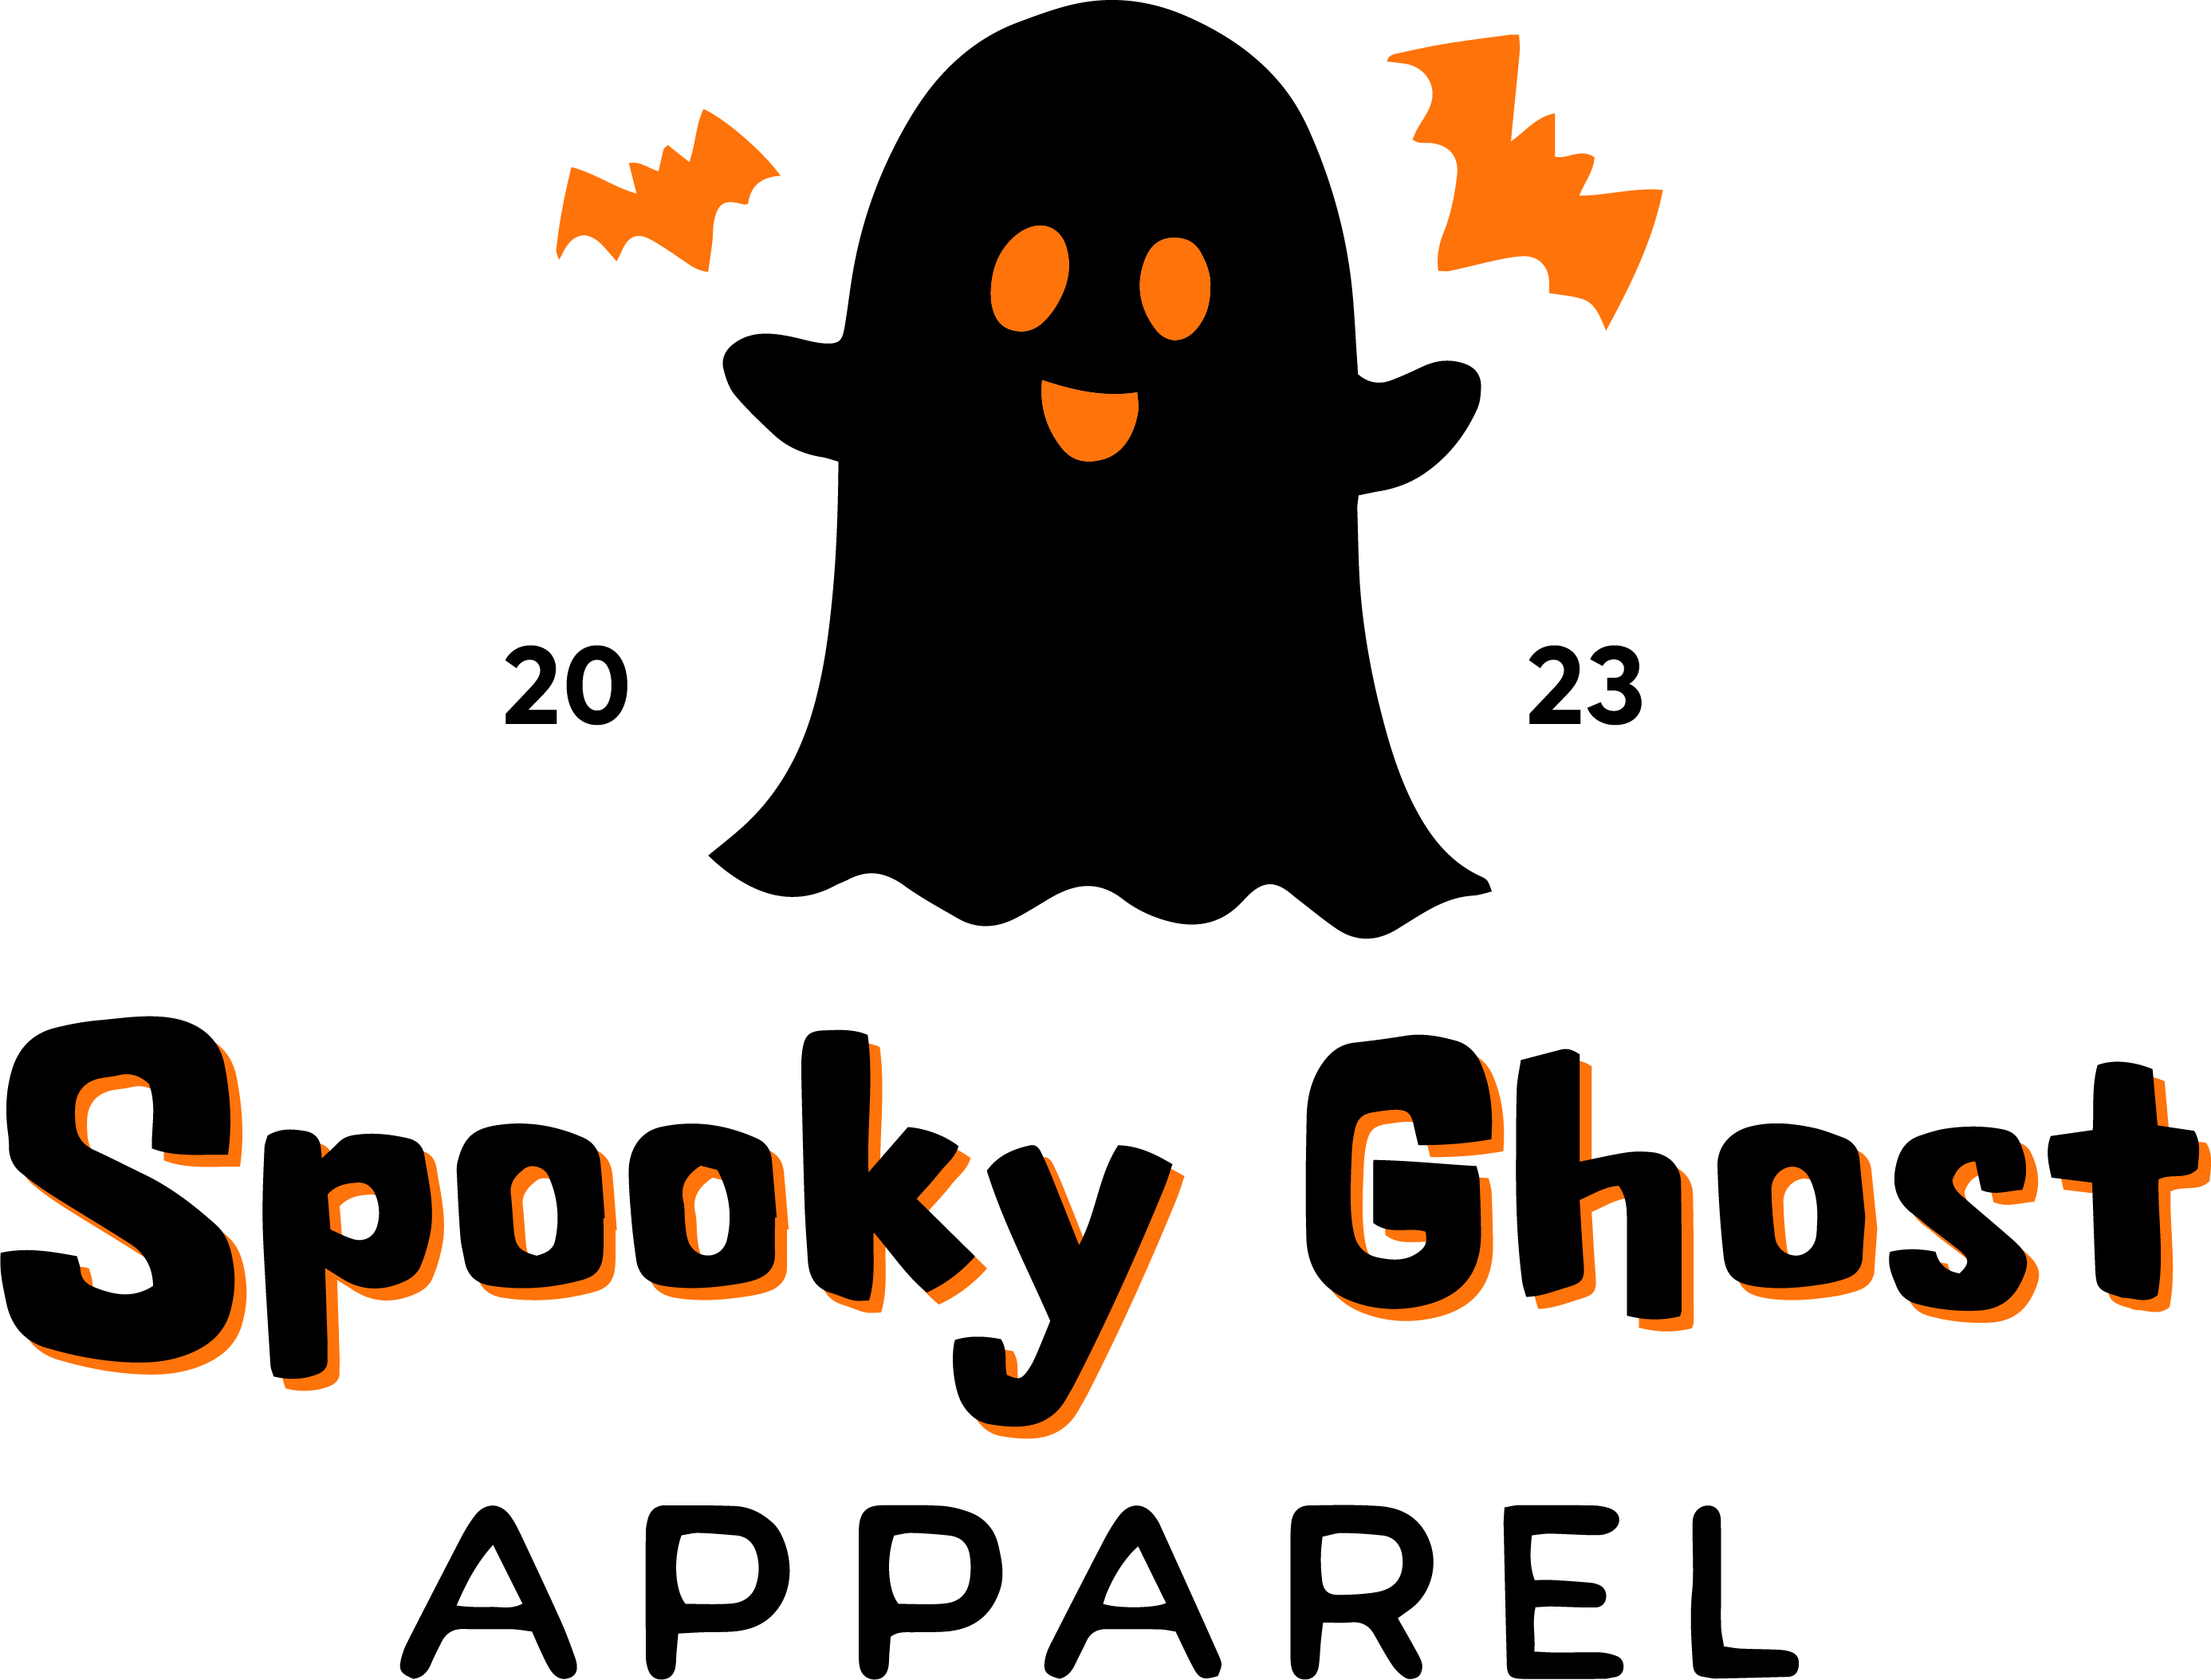 spooky ghost apparel tshirt design 786